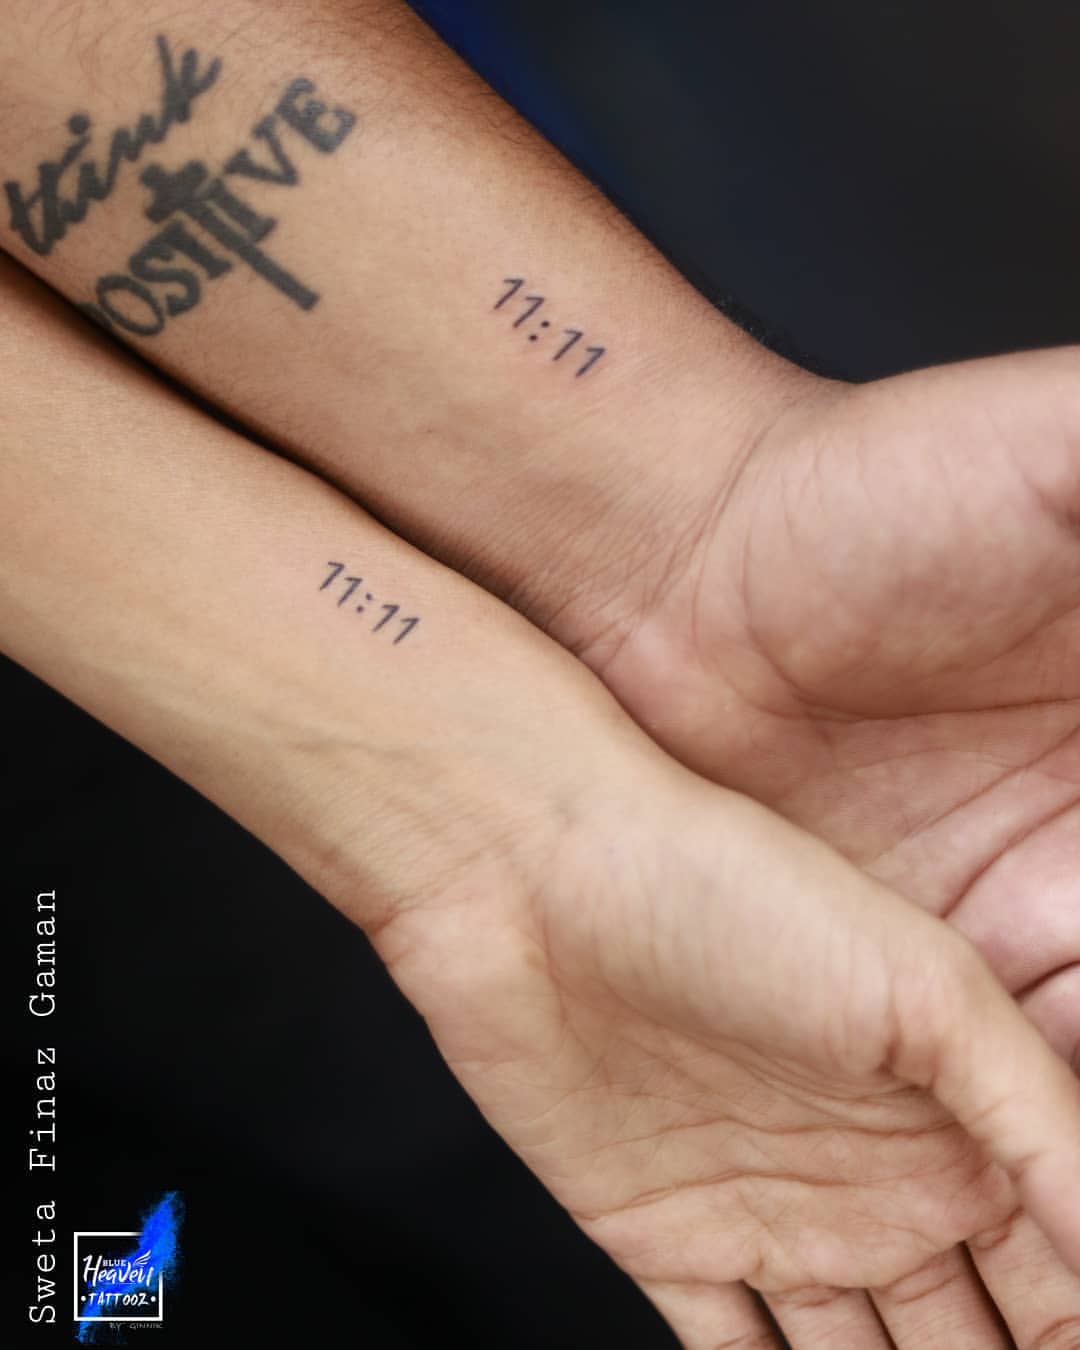 Quote Tattoo on Wrist 2